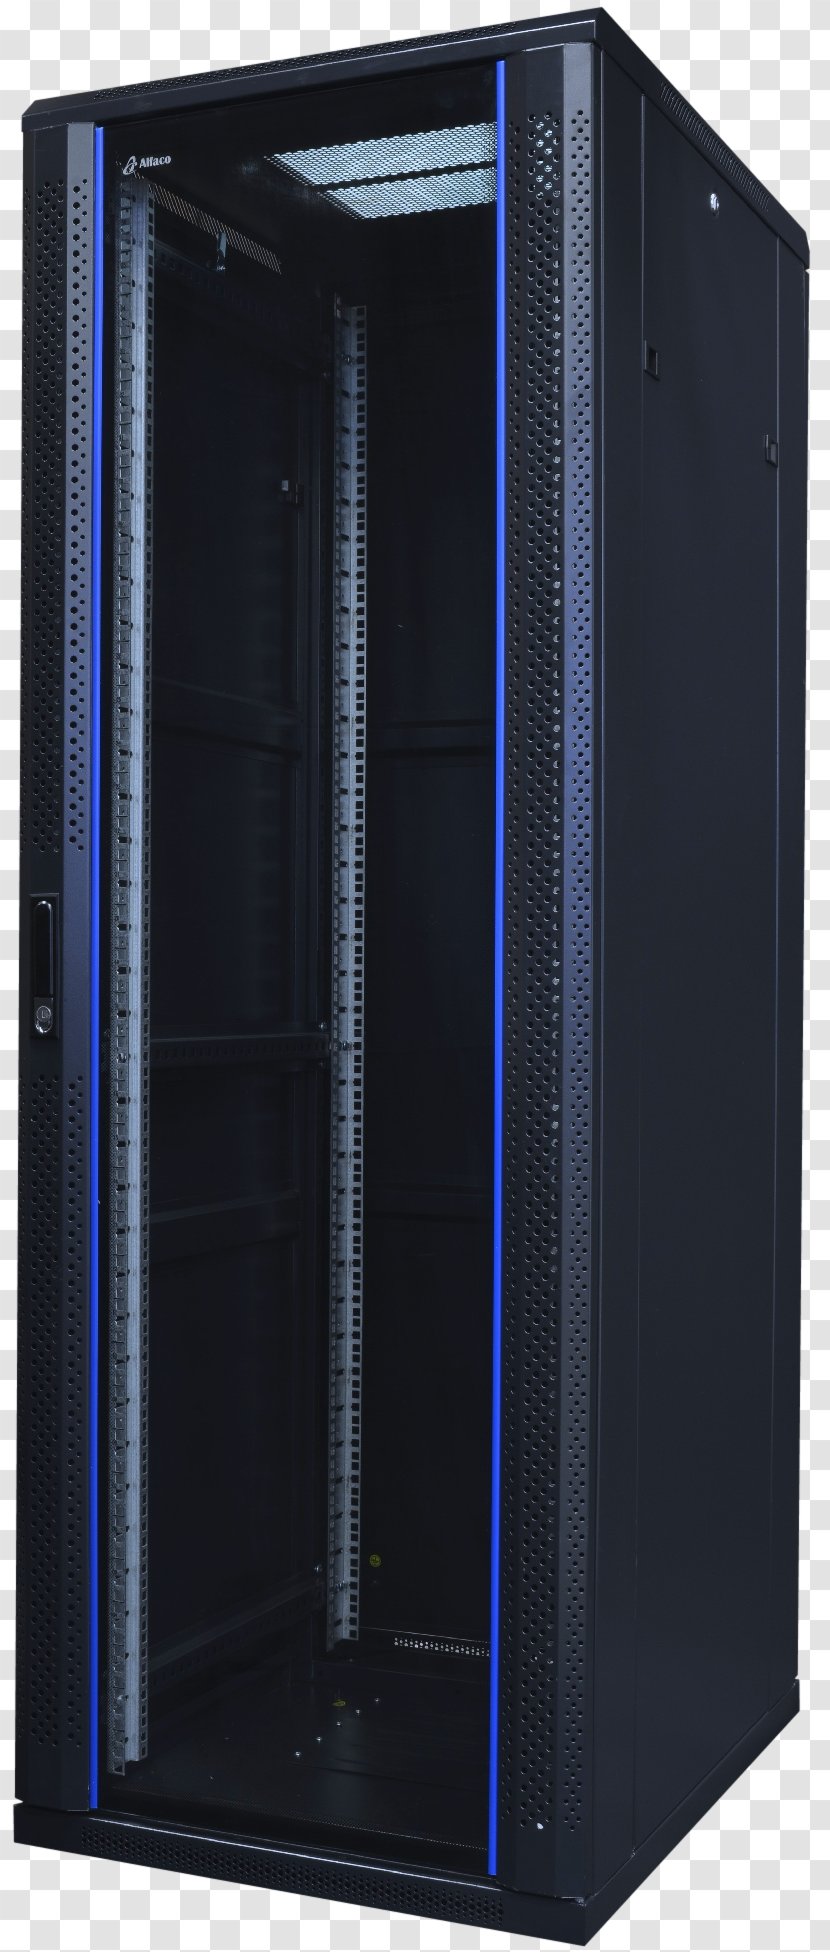 Computer Cases & Housings Servers - Server - 19-inch Rack Transparent PNG